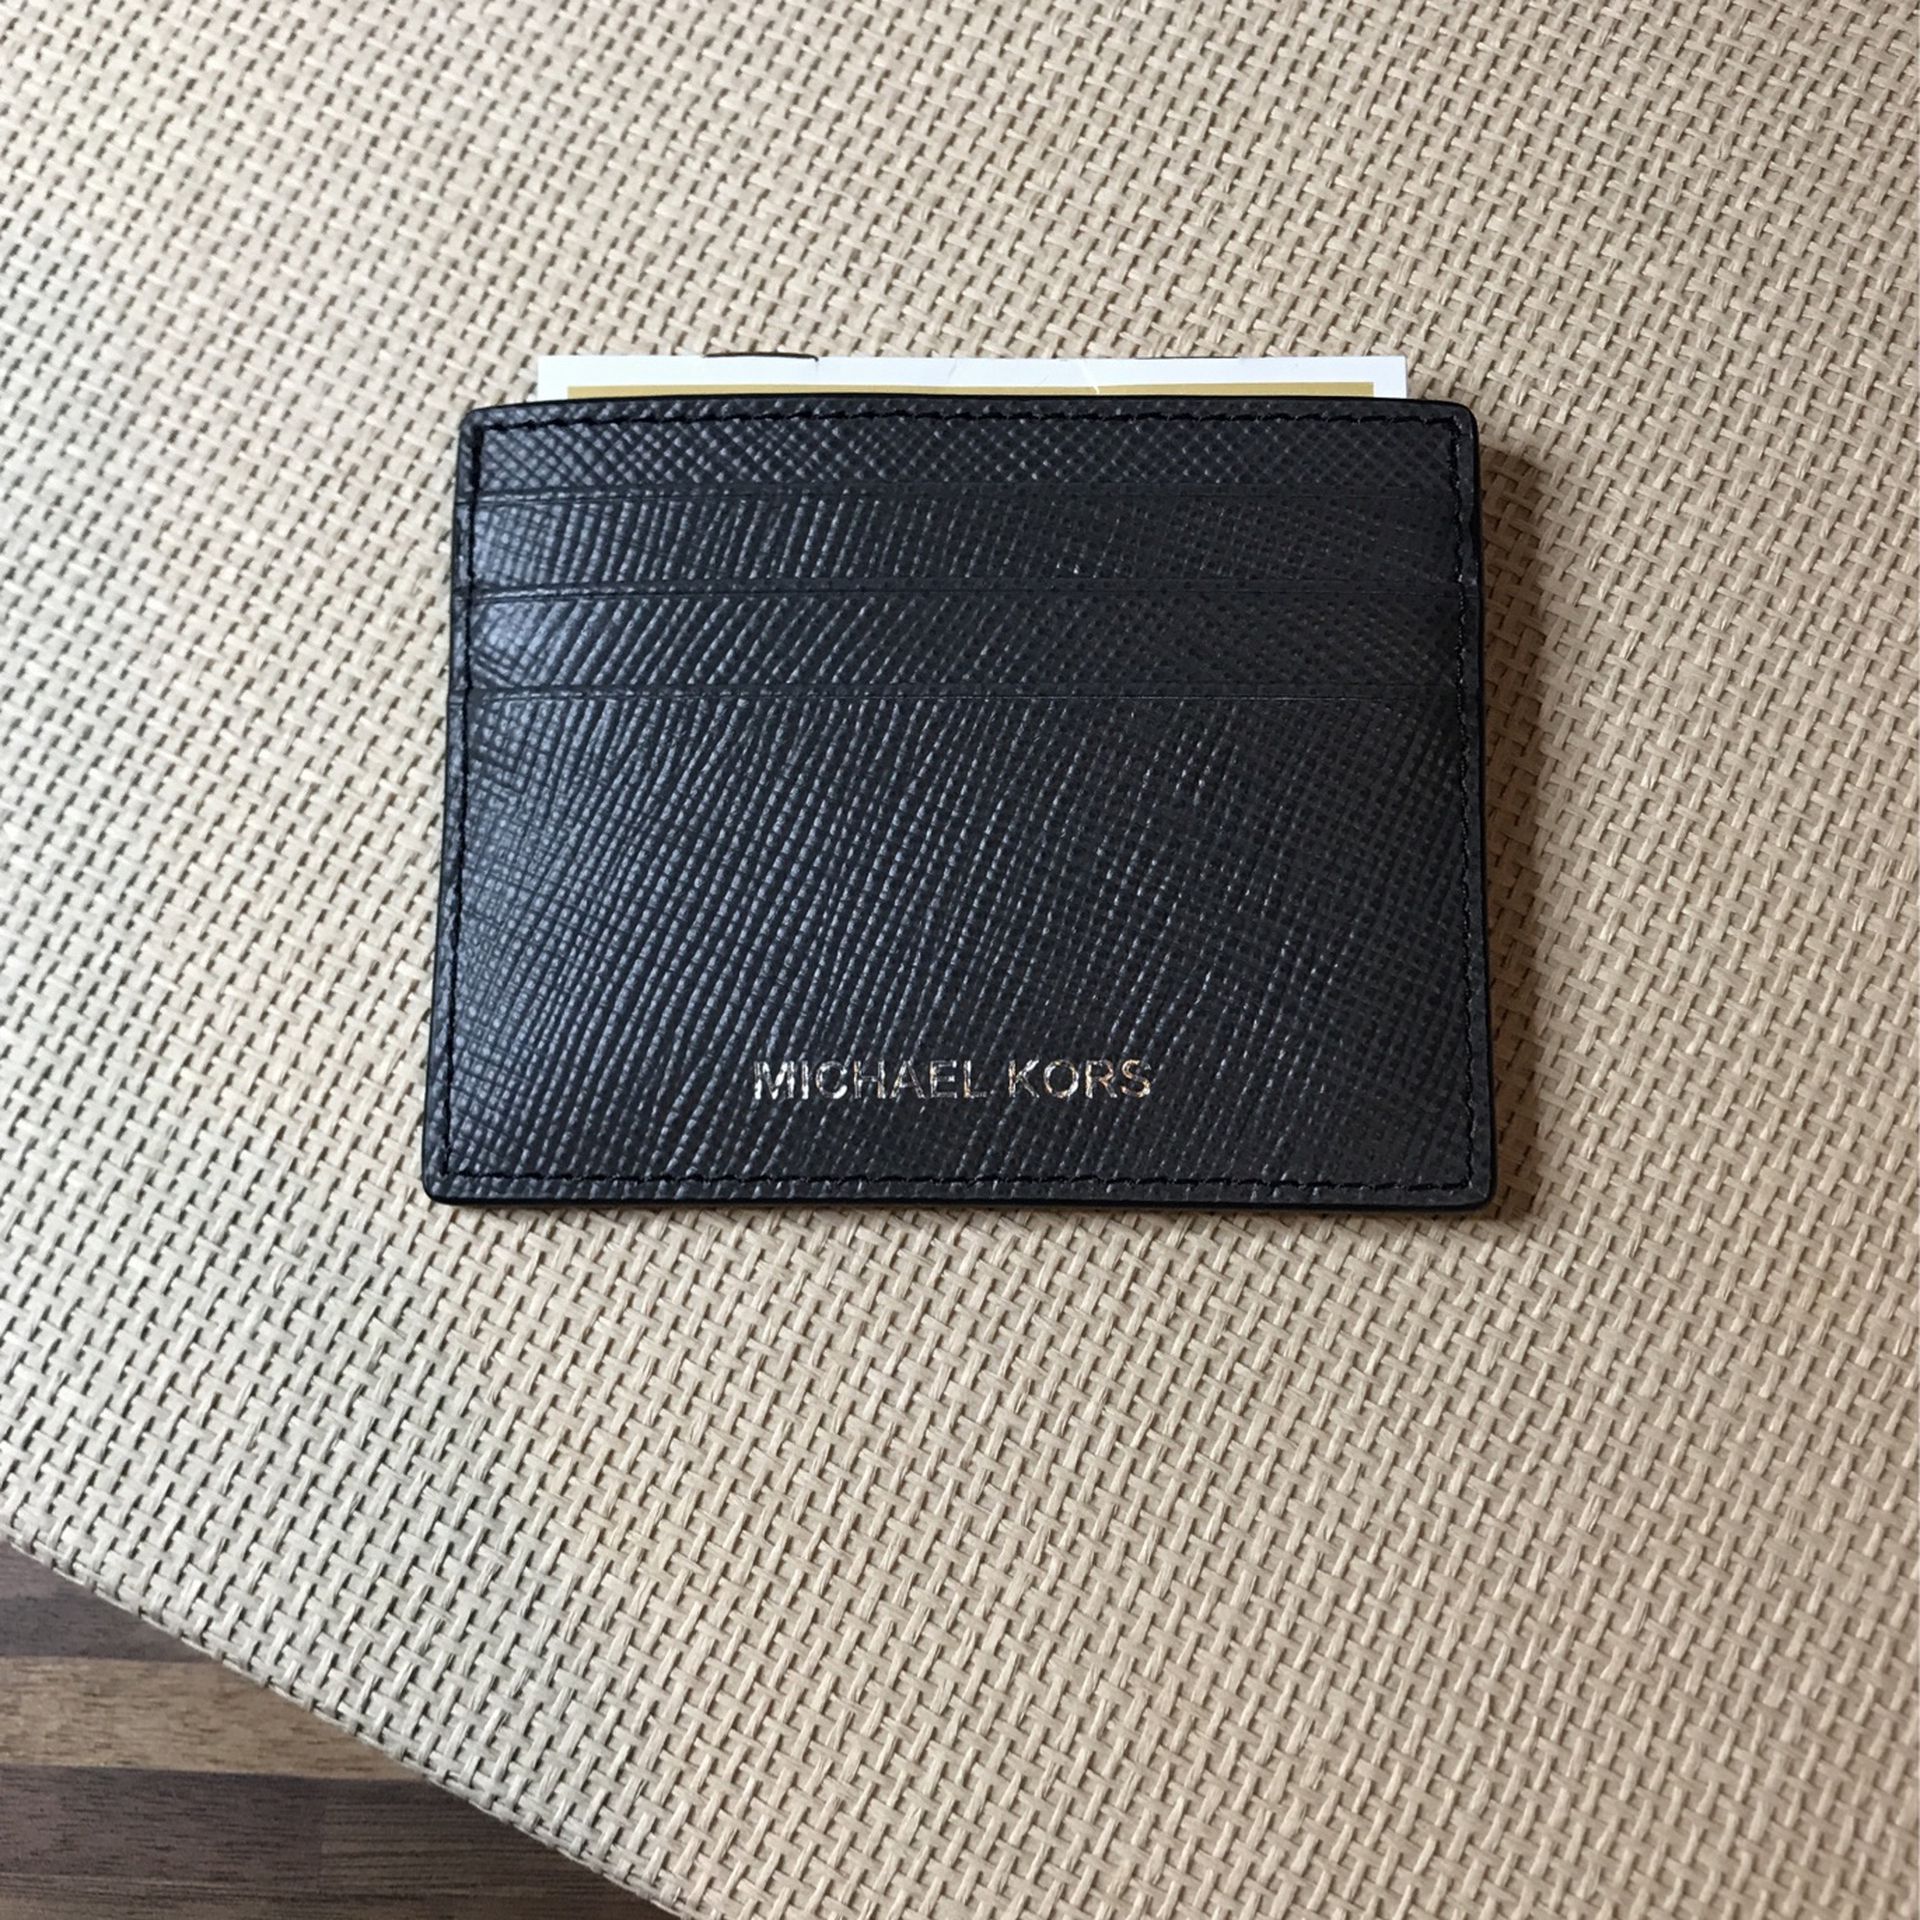 Michael Kors Card Holder/ Wallet